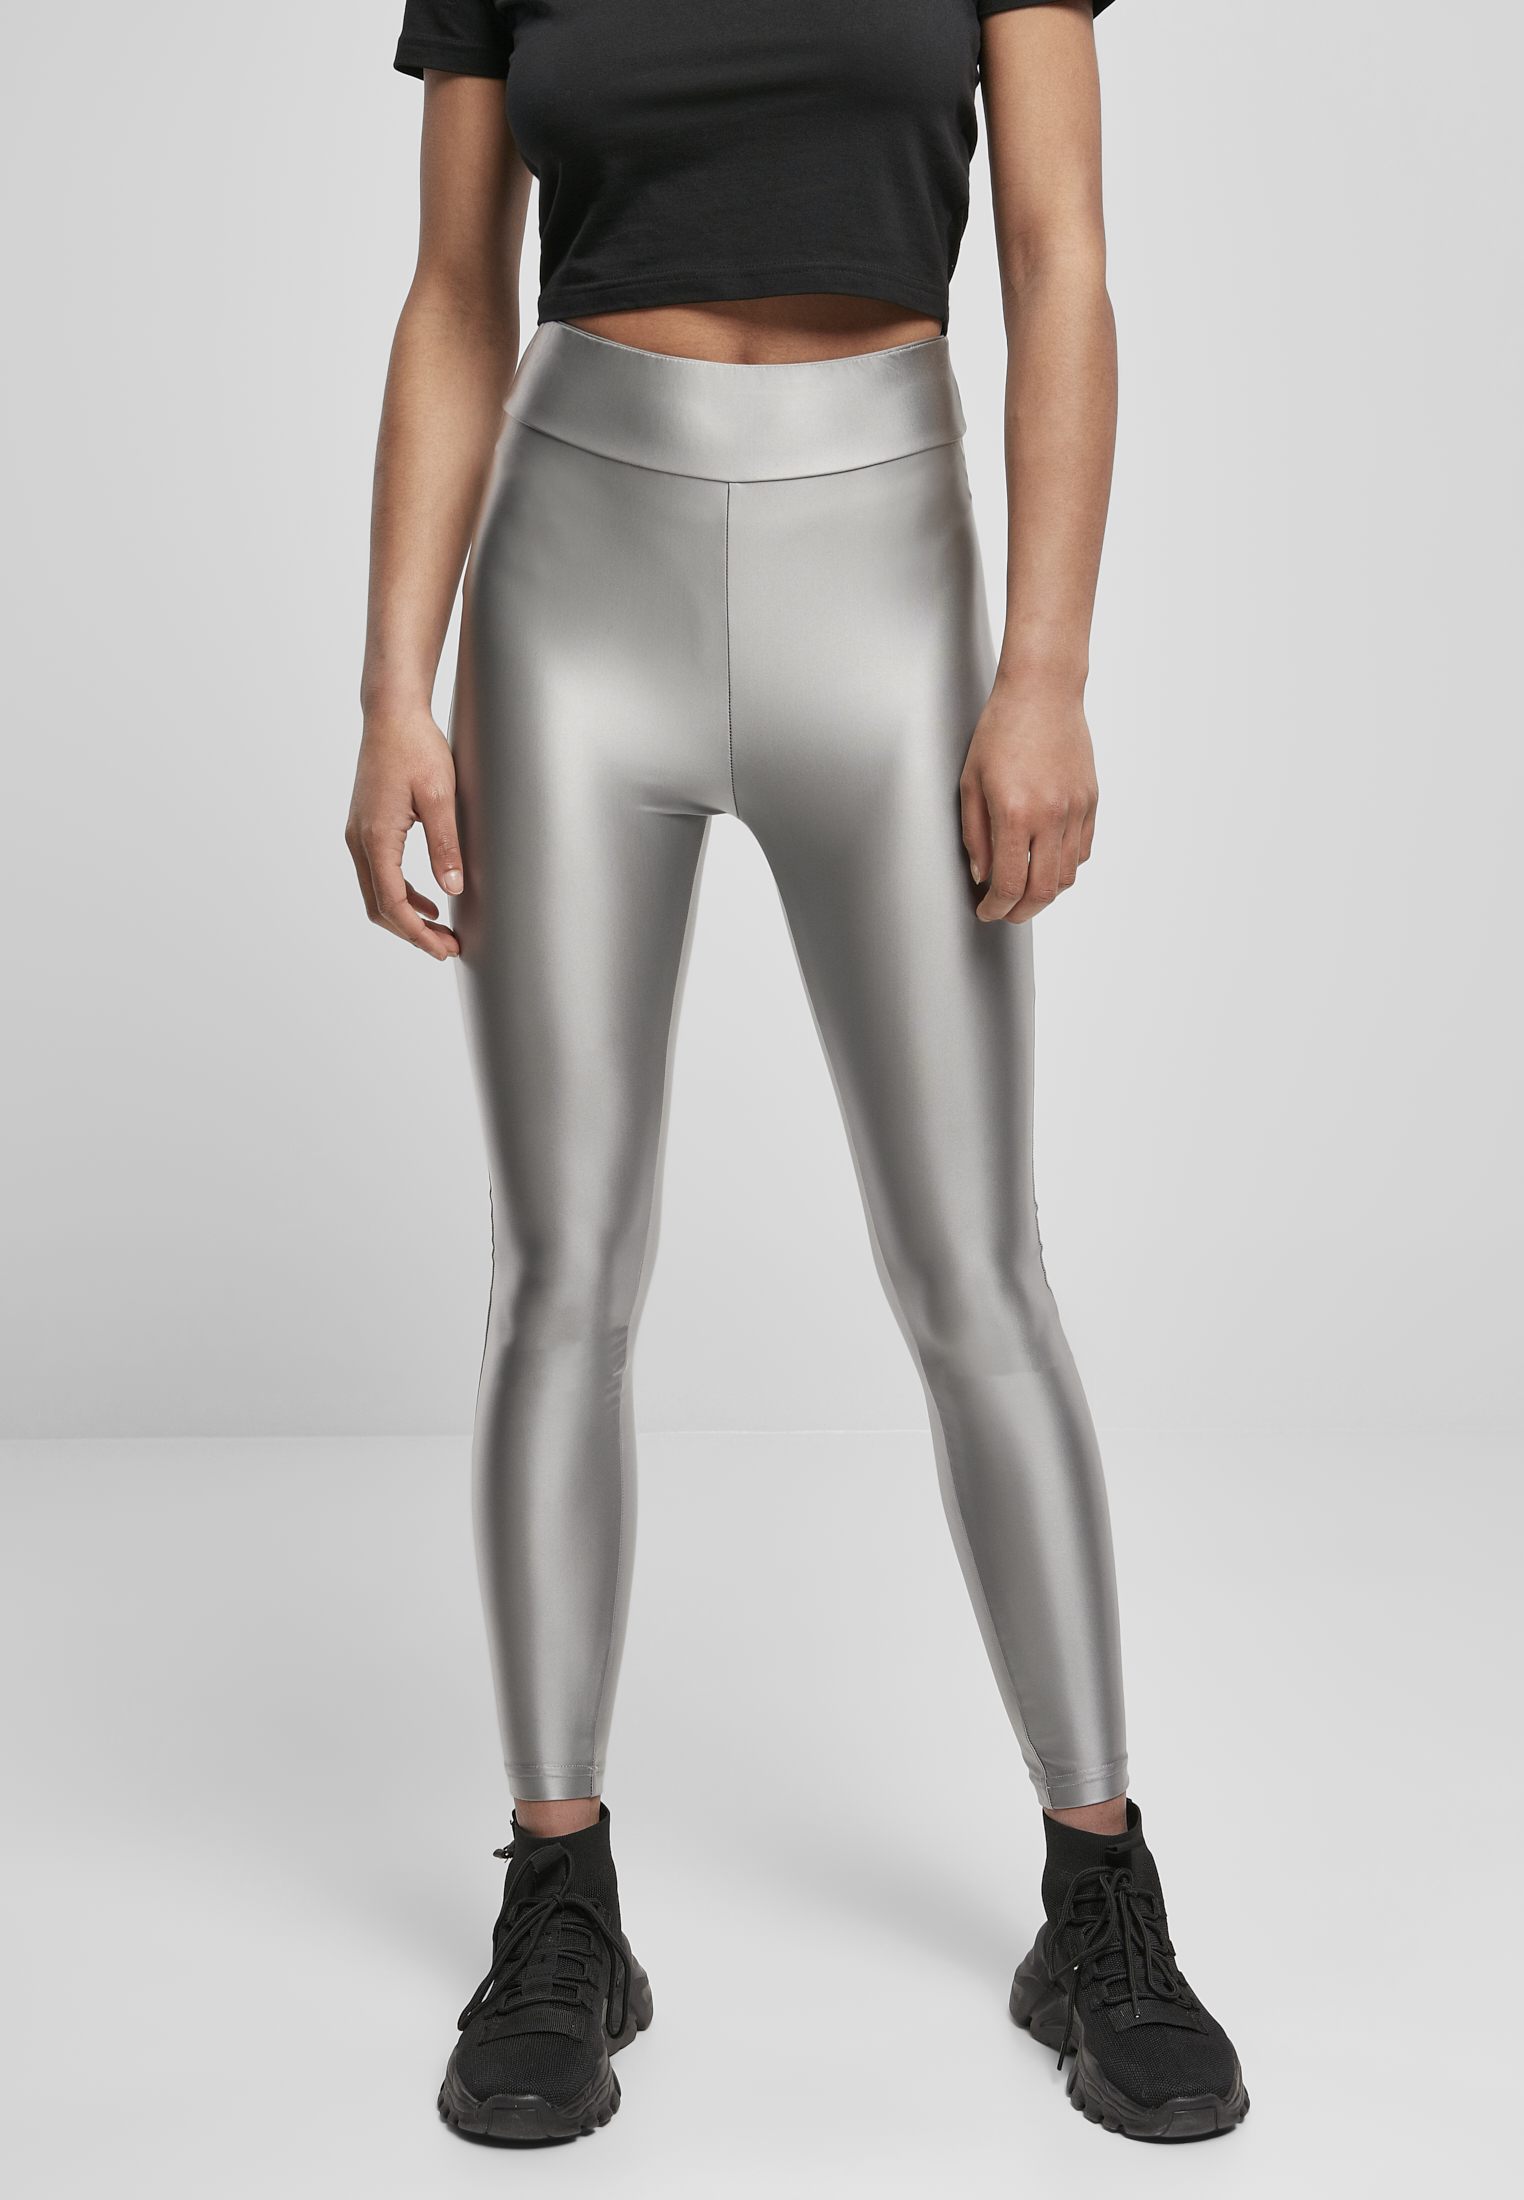 Women's Shiny Metallic High-Waisted Leggings - Dark Silver